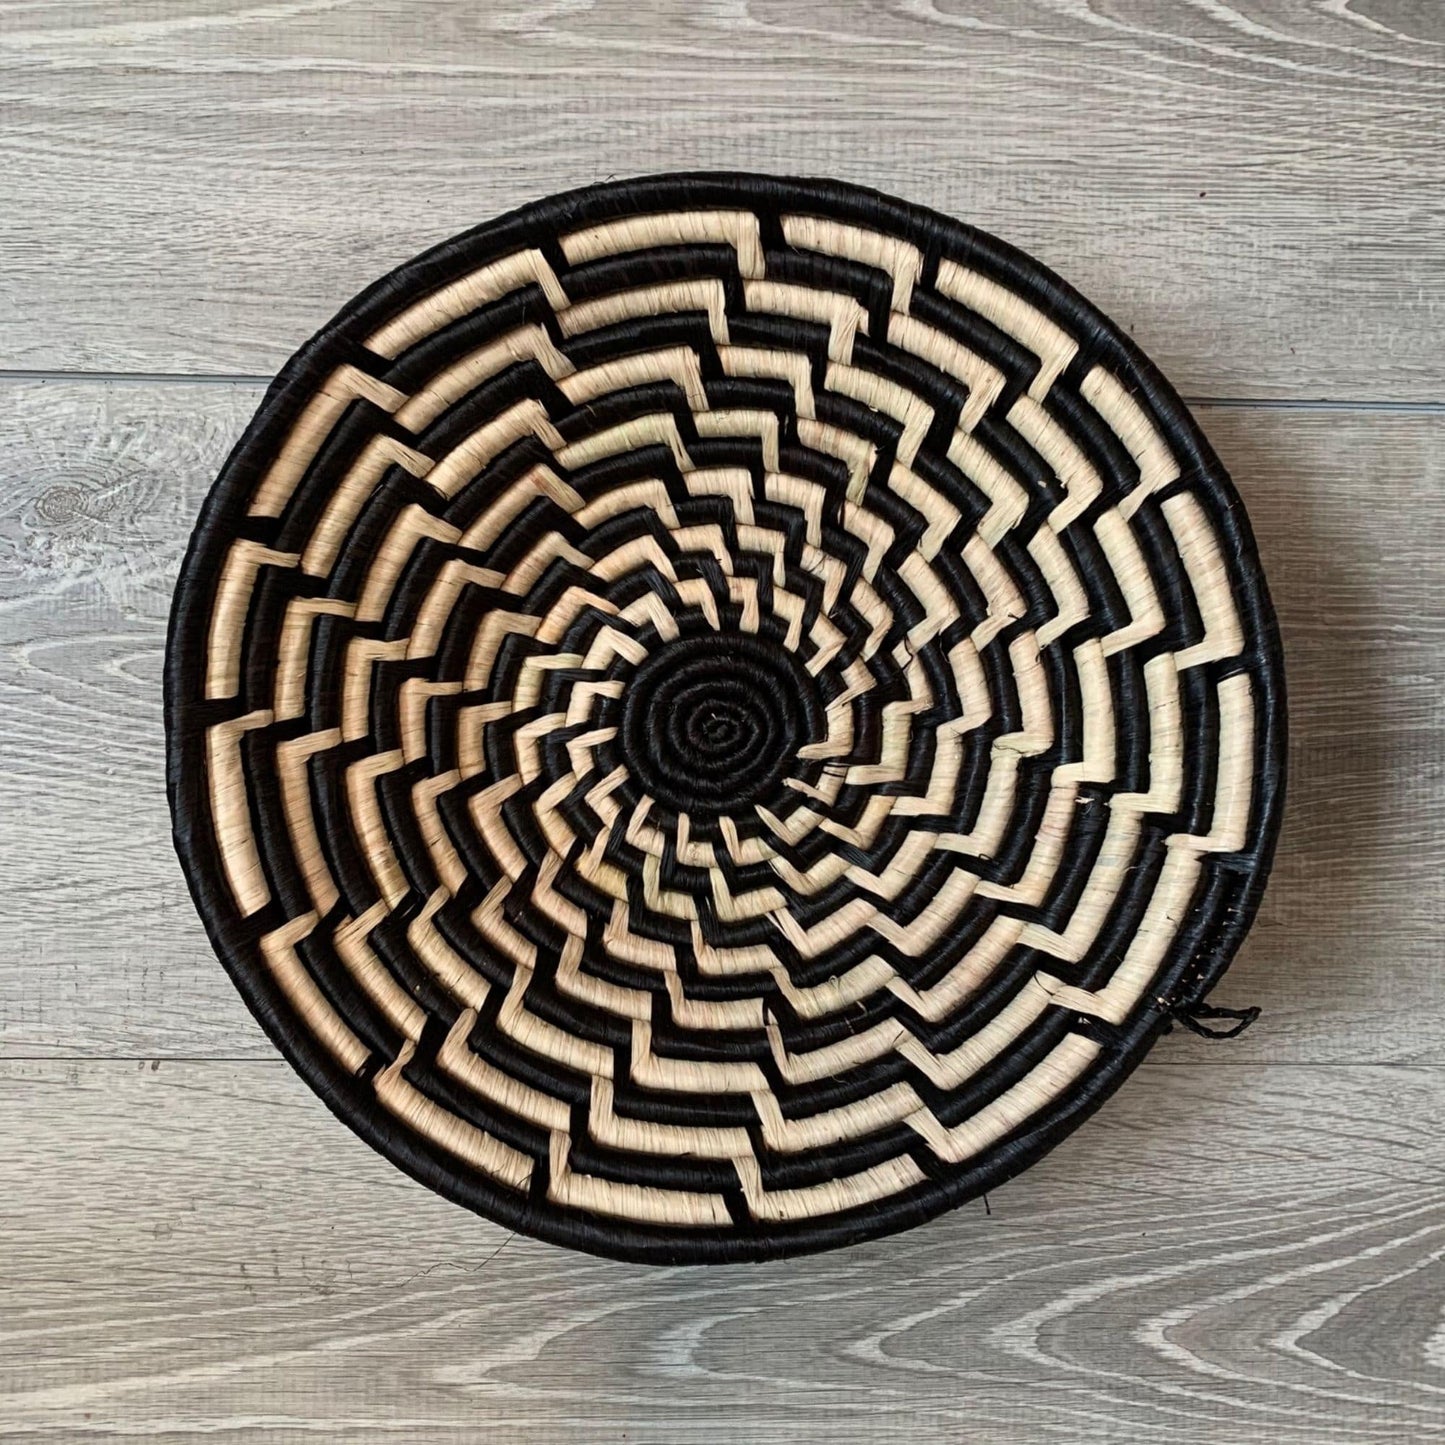 Gitzell Woven Sisal Basket Feathered Monochrome Pattern